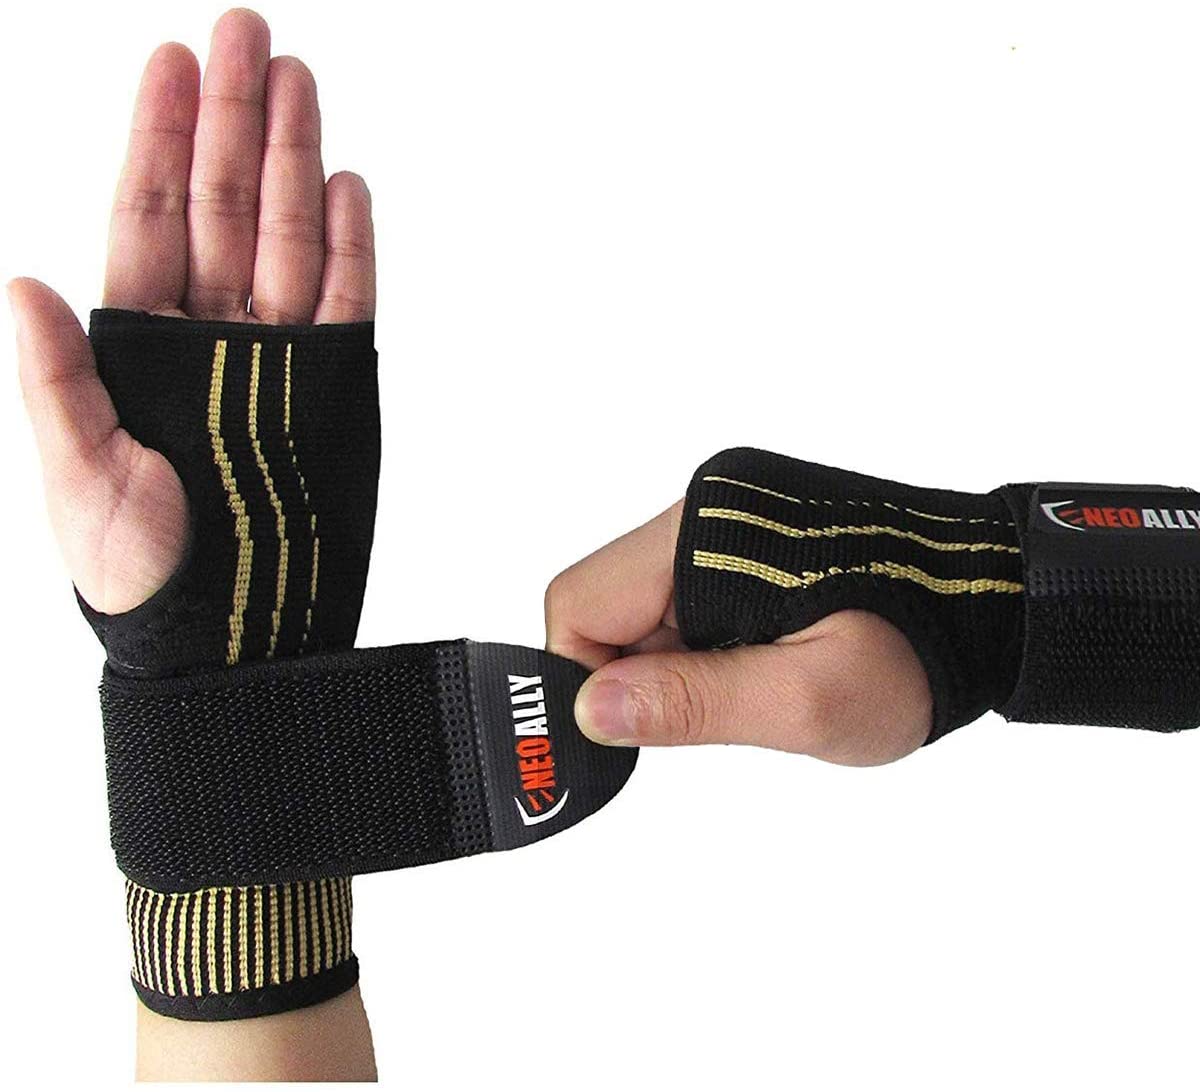 UptoFit - Copper Wrist Compression Sleeve, Hand Brace Wrist Support for  Carpal Tunnel, Wrist Brace for Tendonitis, Breathable Copper Compression